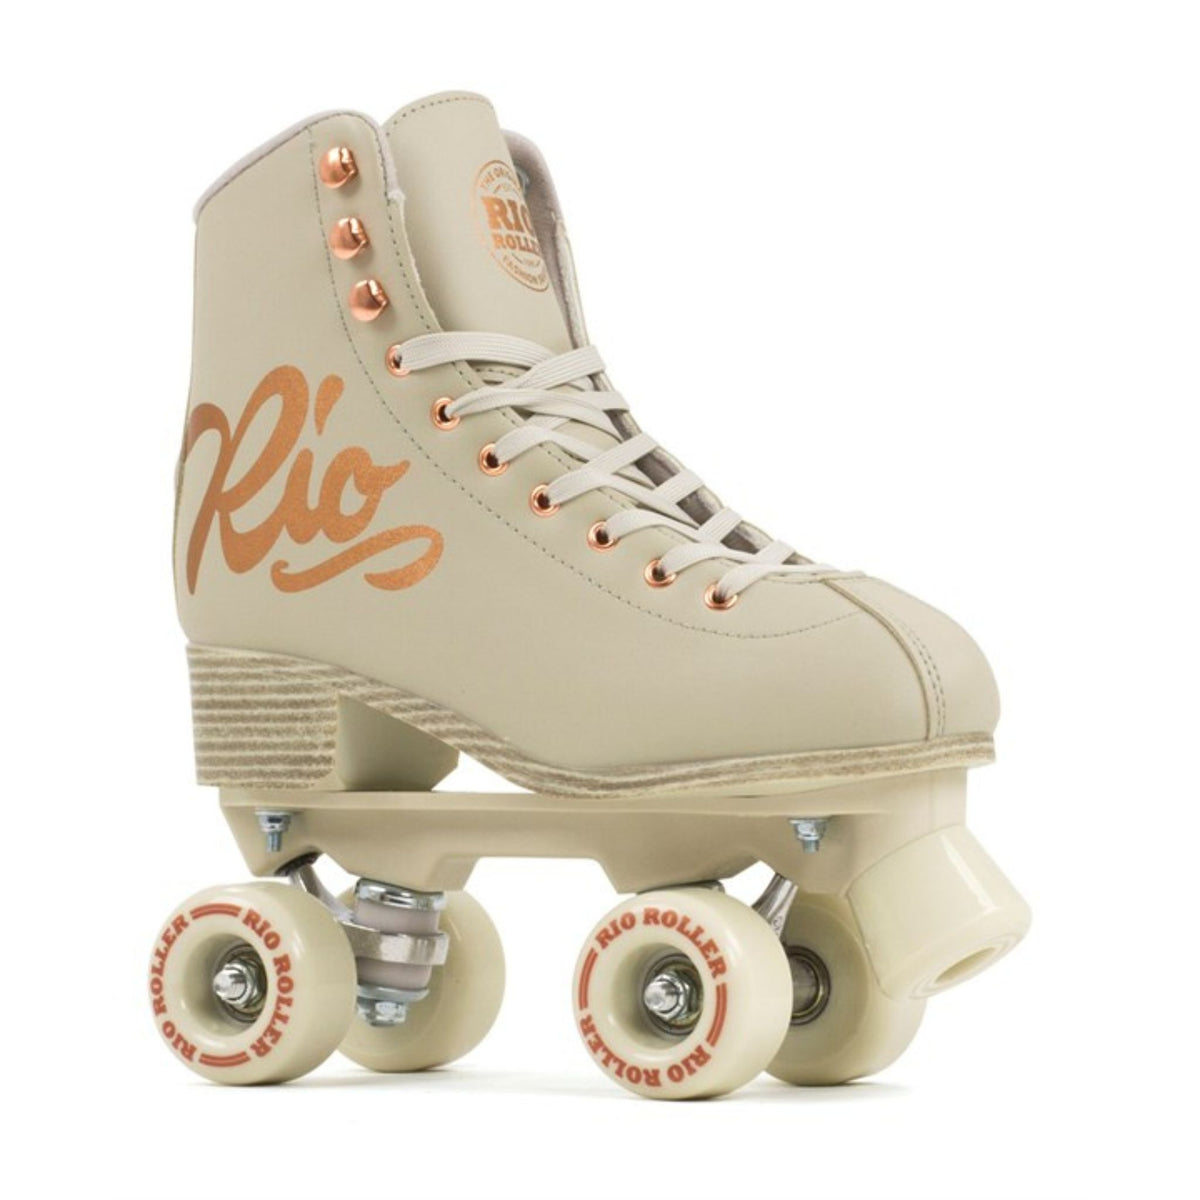 Rio Roller Rose Quad Skates - JT Skate